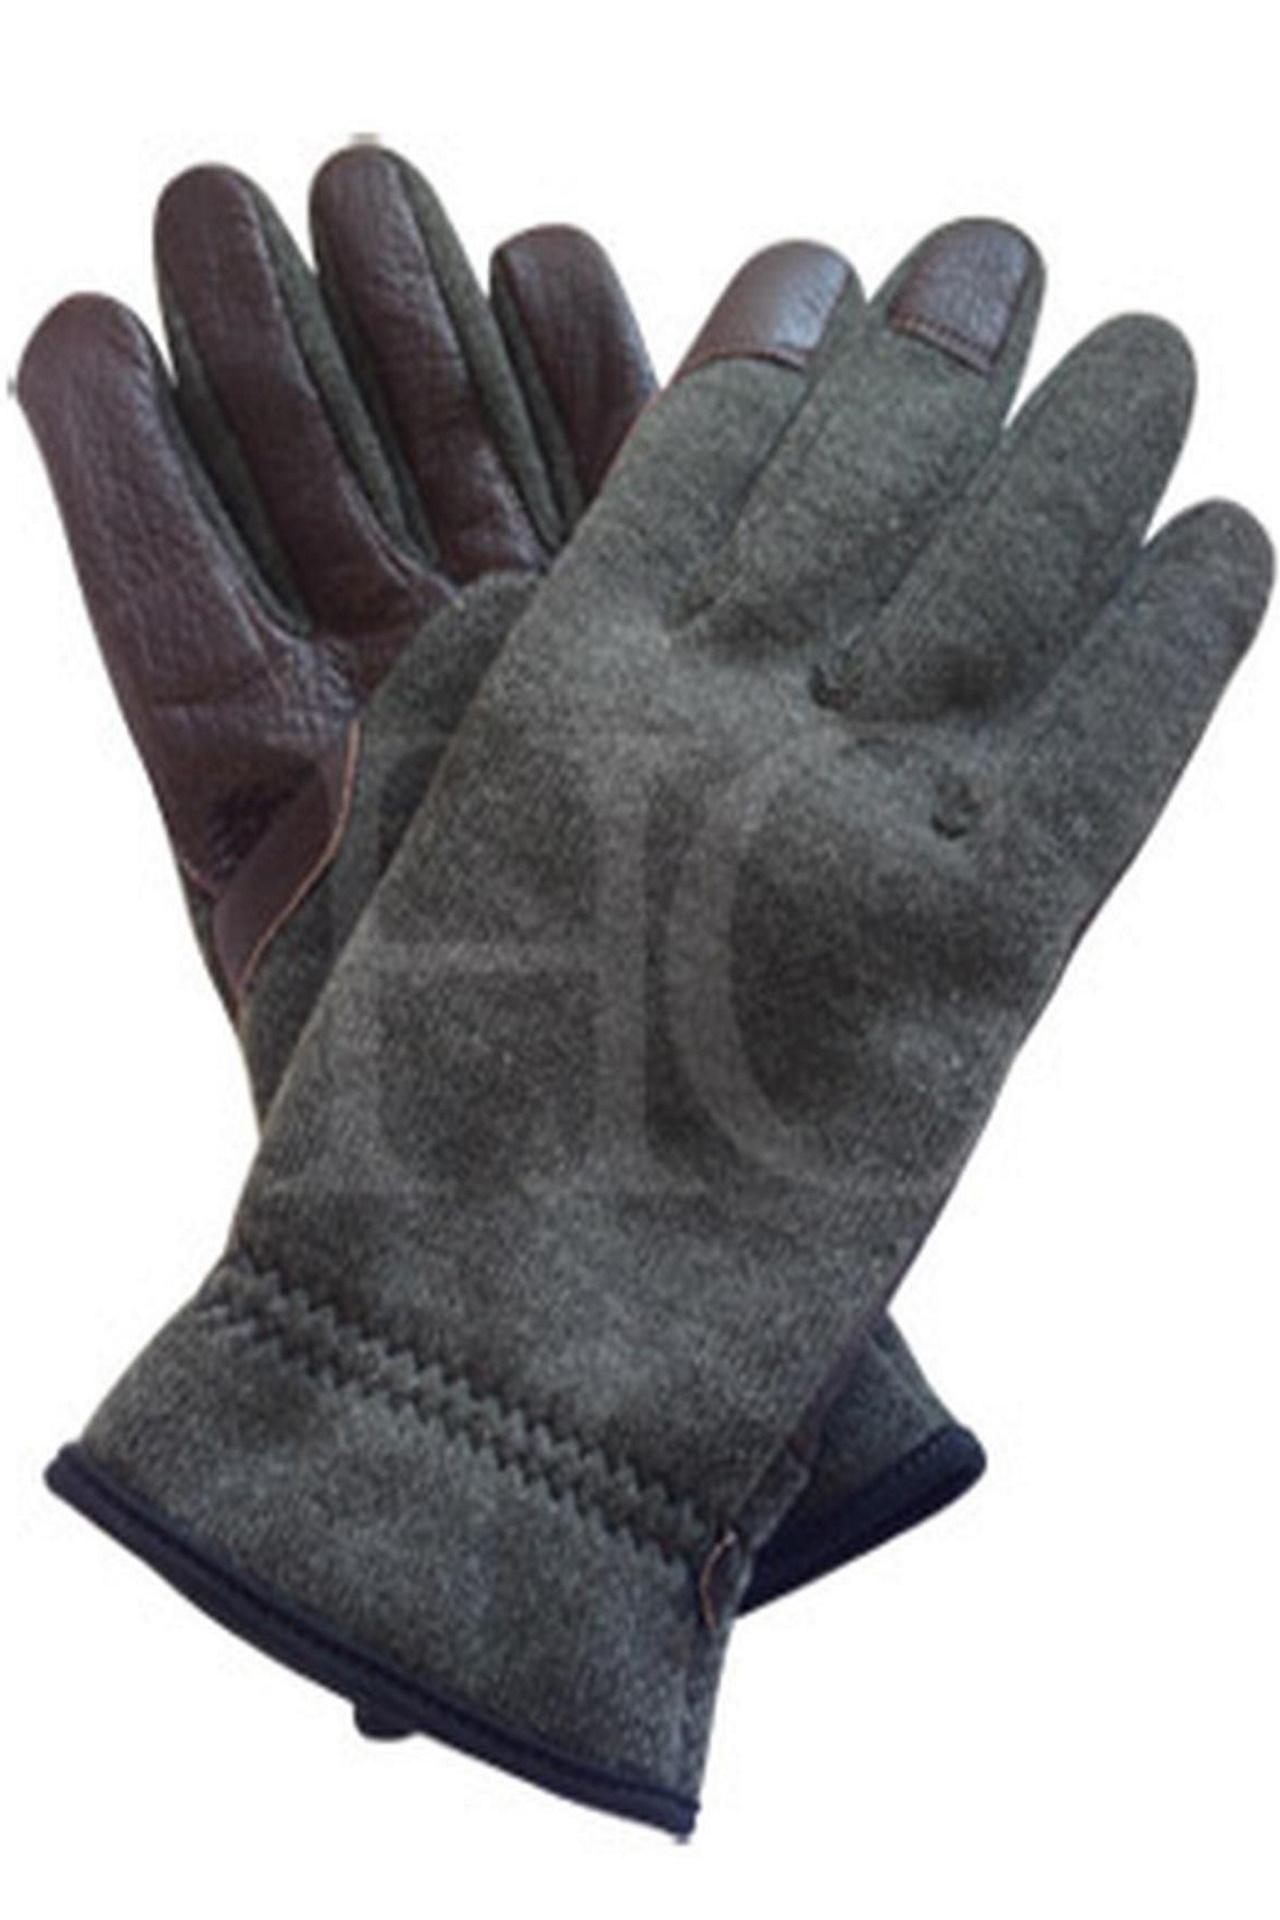 Bison Leather Winter Gloves